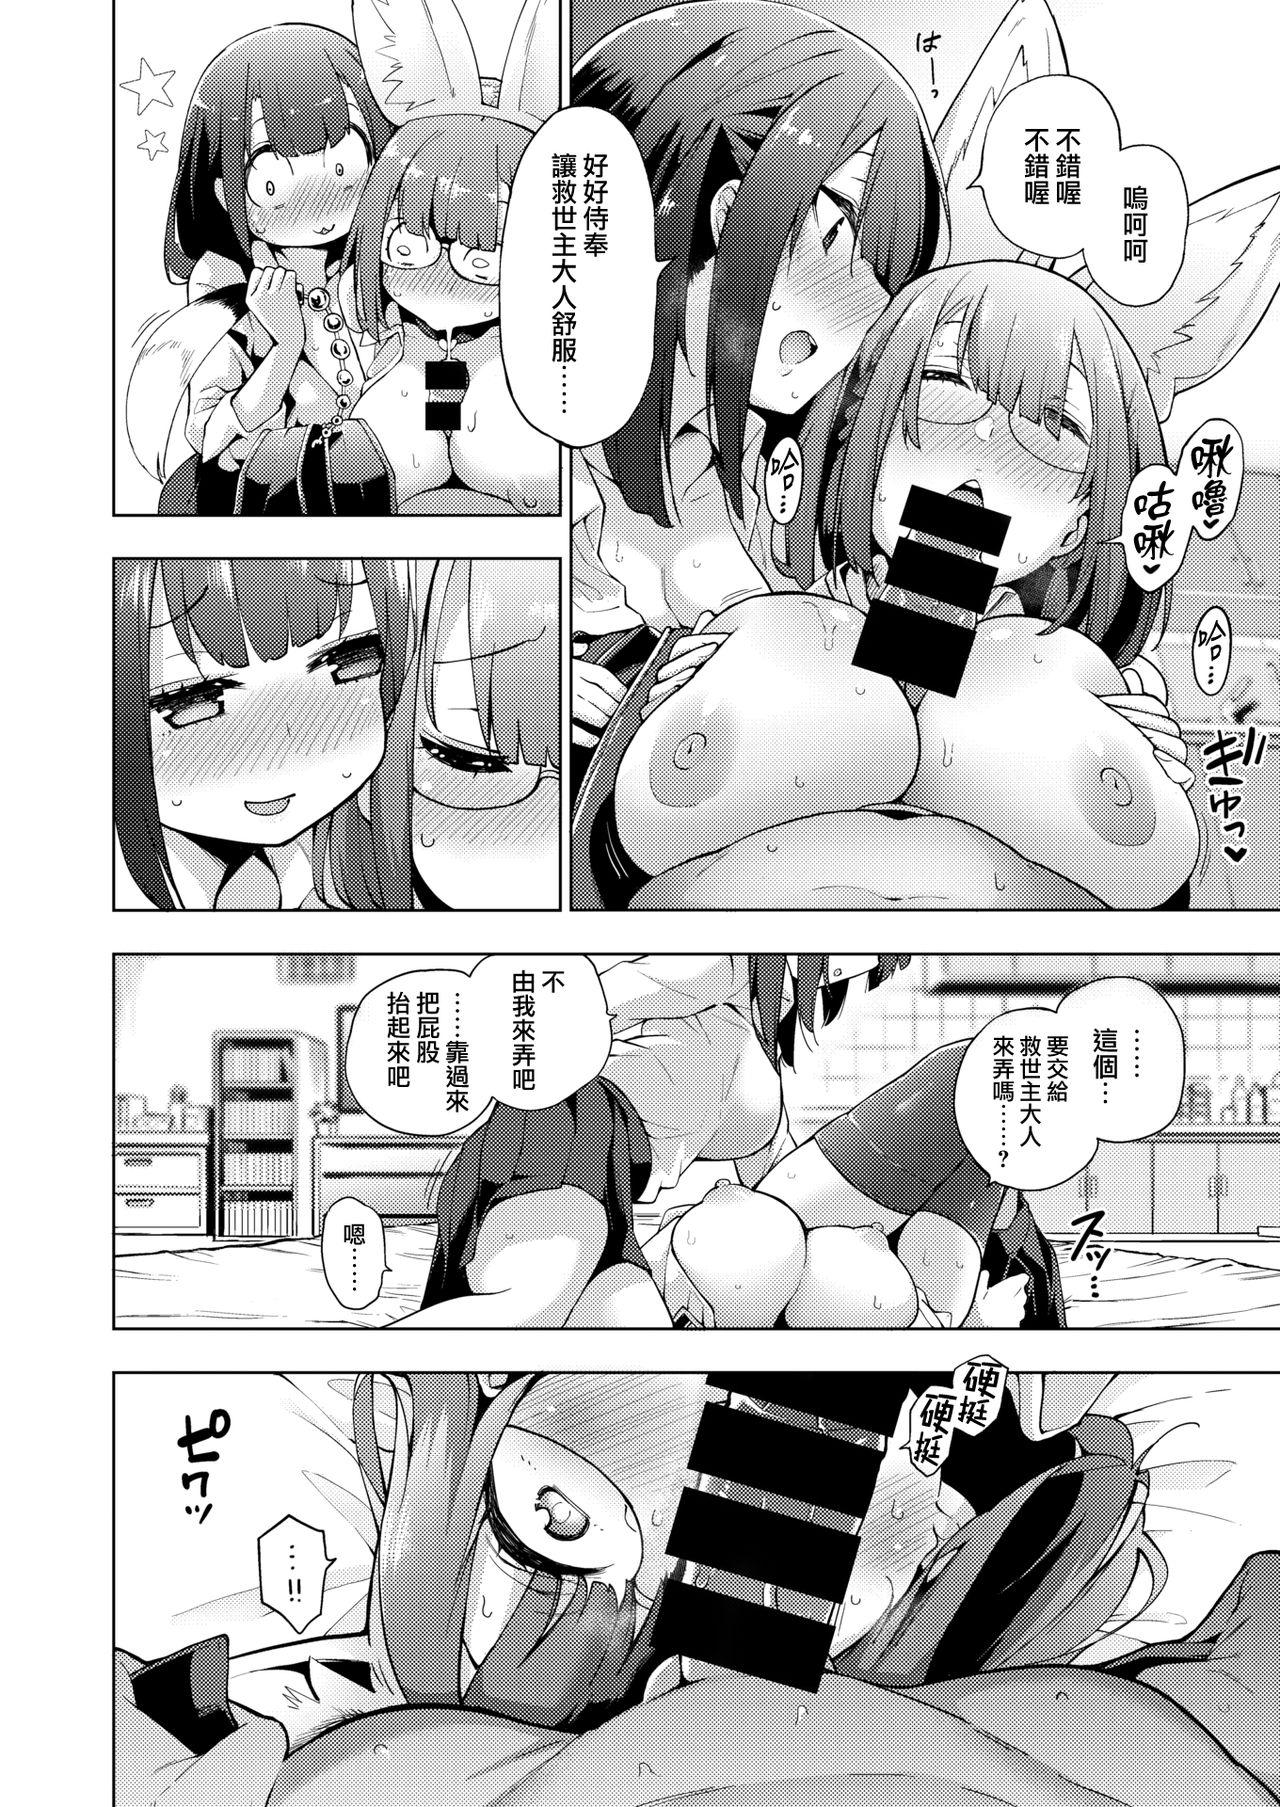 Deutsch POV Kamimachi Shoujo #2 Monster - Page 6